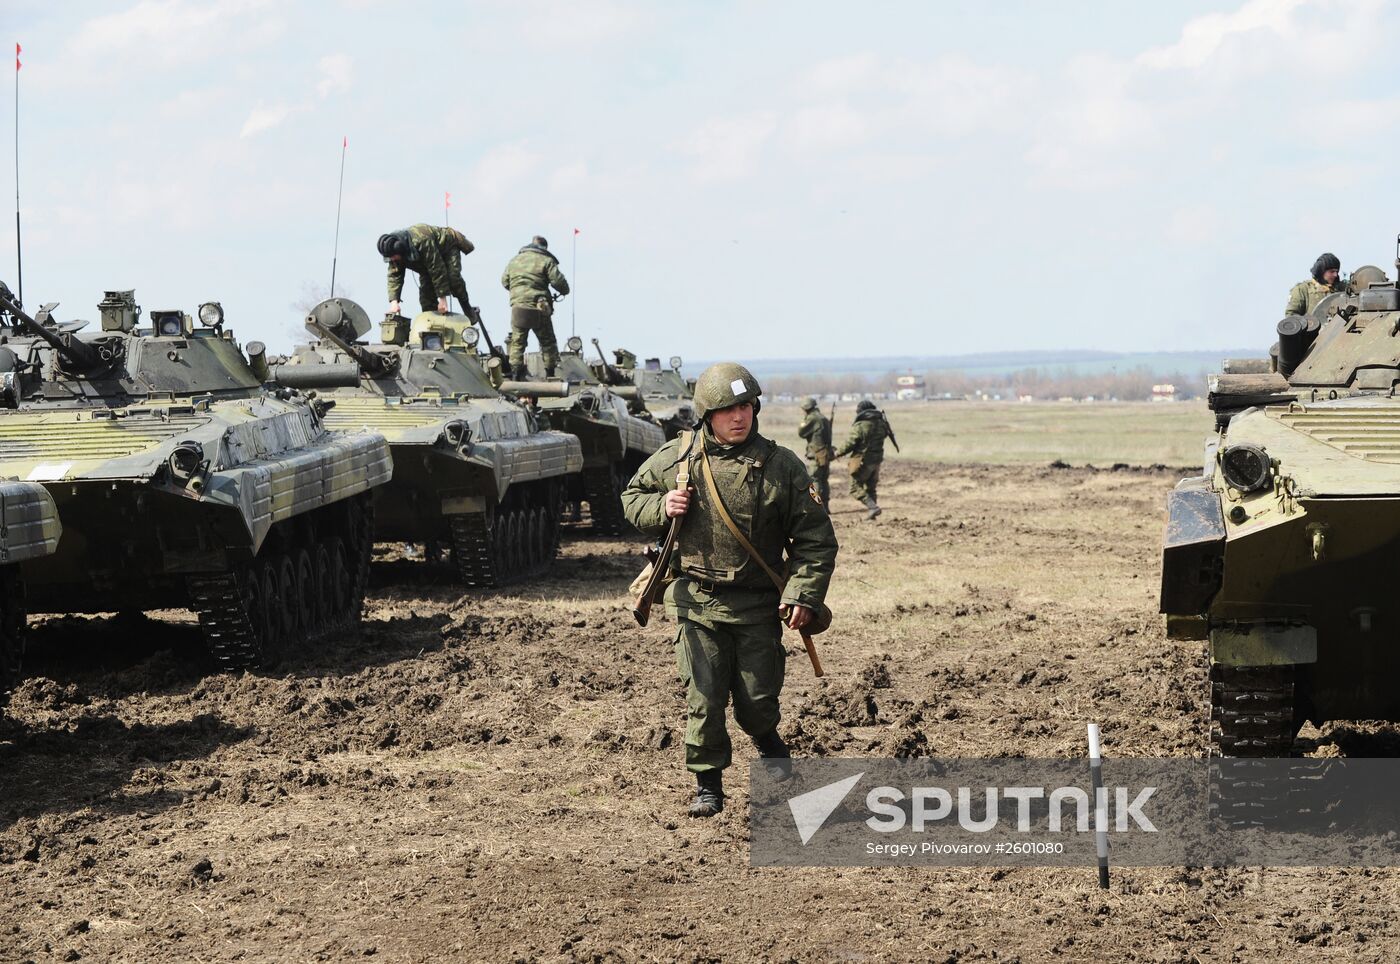 Drill by Internal Affairs Ministry's Internal Troops in Kadamovsky range in Rostov Region